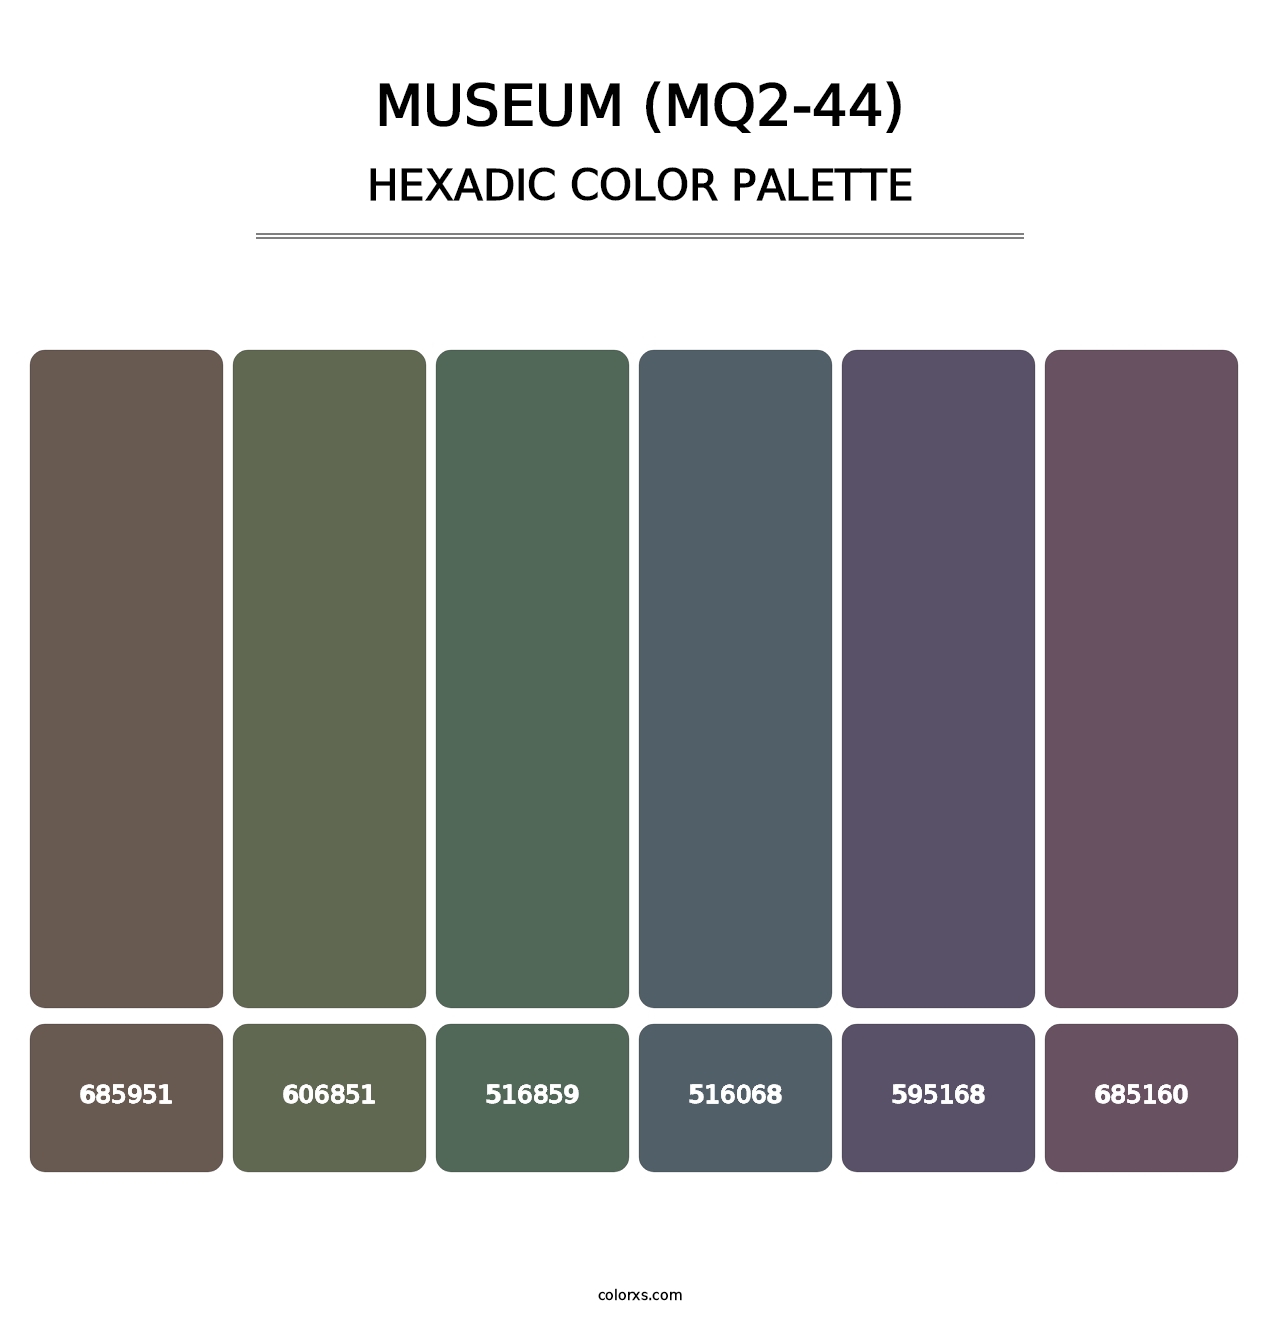 Museum (MQ2-44) - Hexadic Color Palette